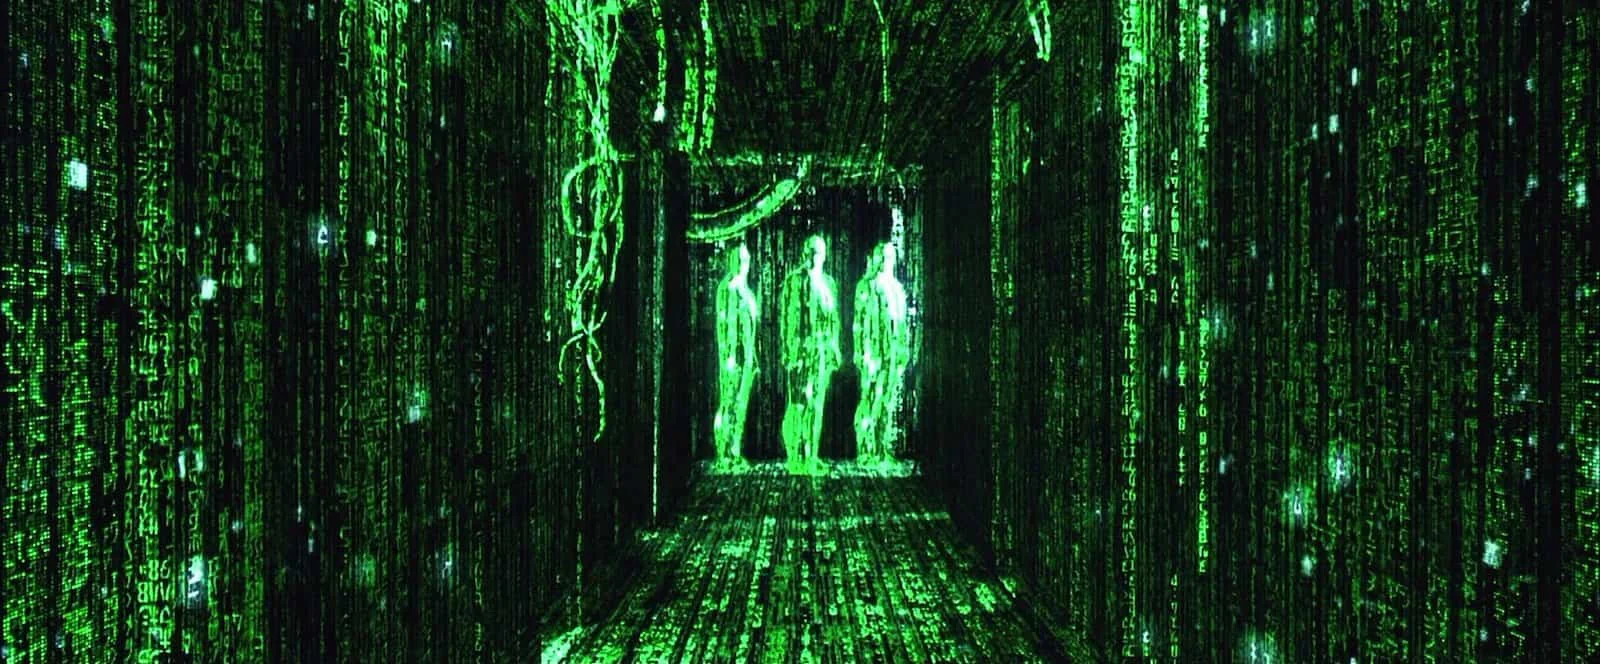 What is VFX - The Matrix - Code